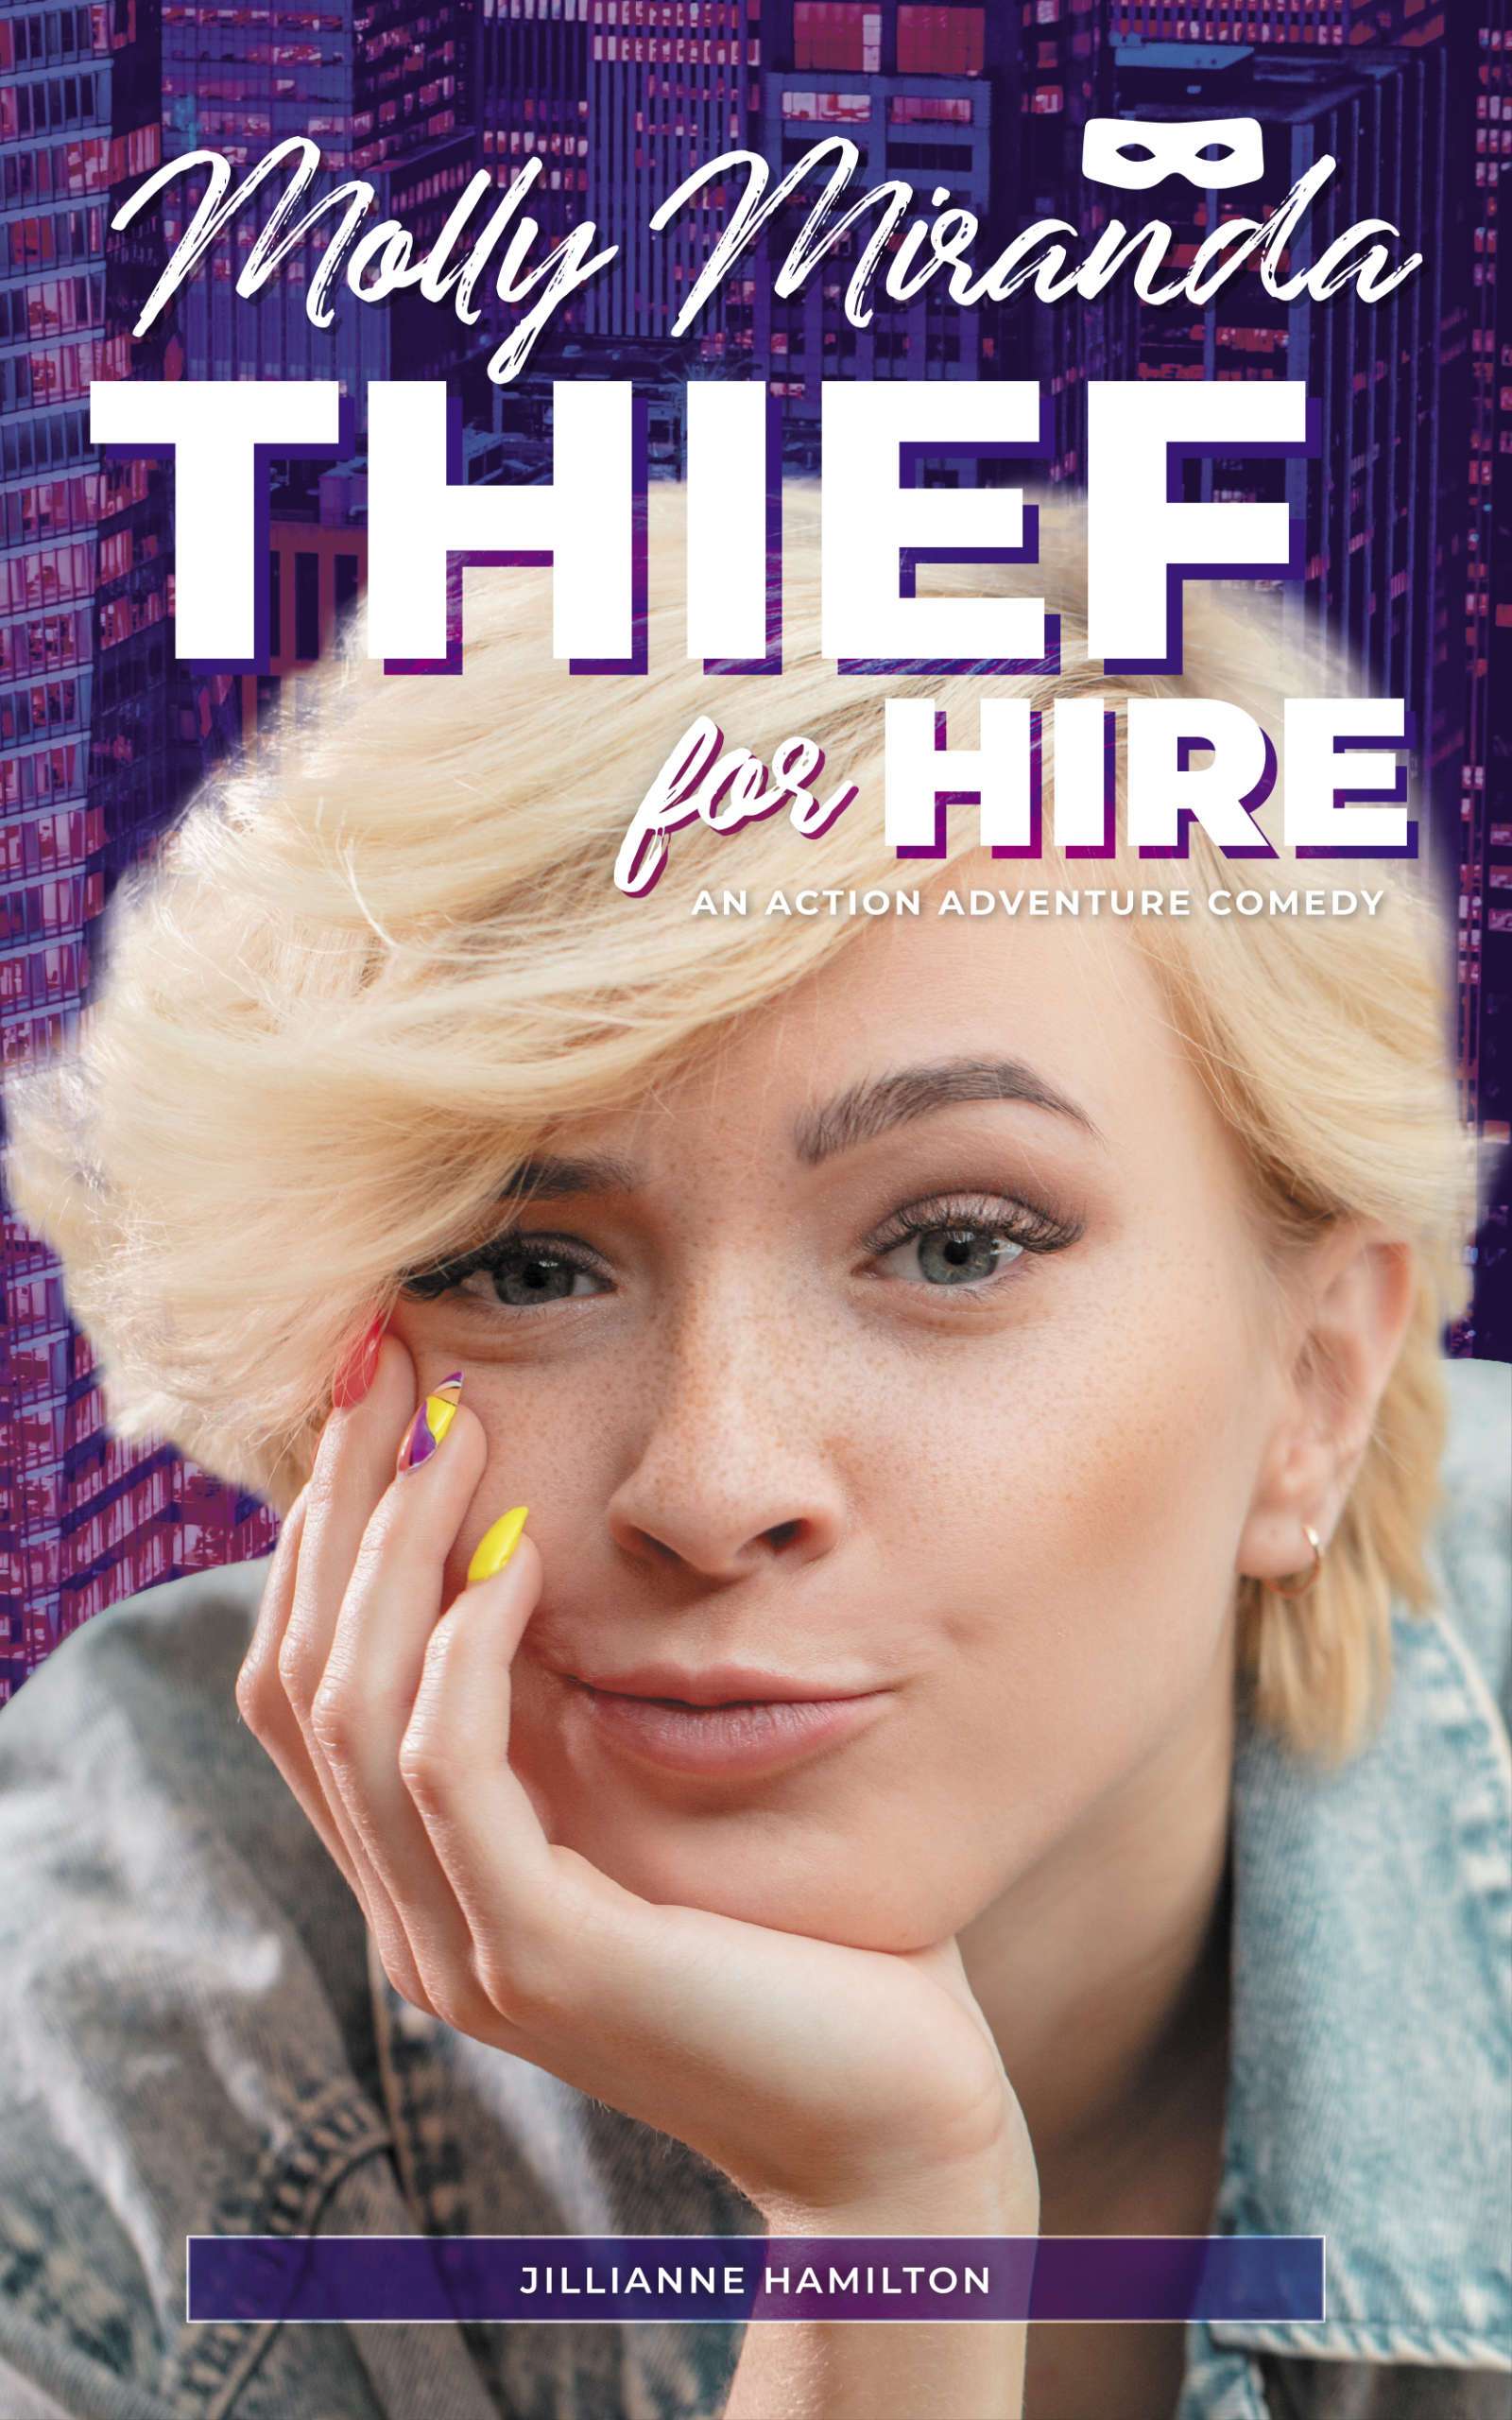 Molly Miranda: Thief for Hire